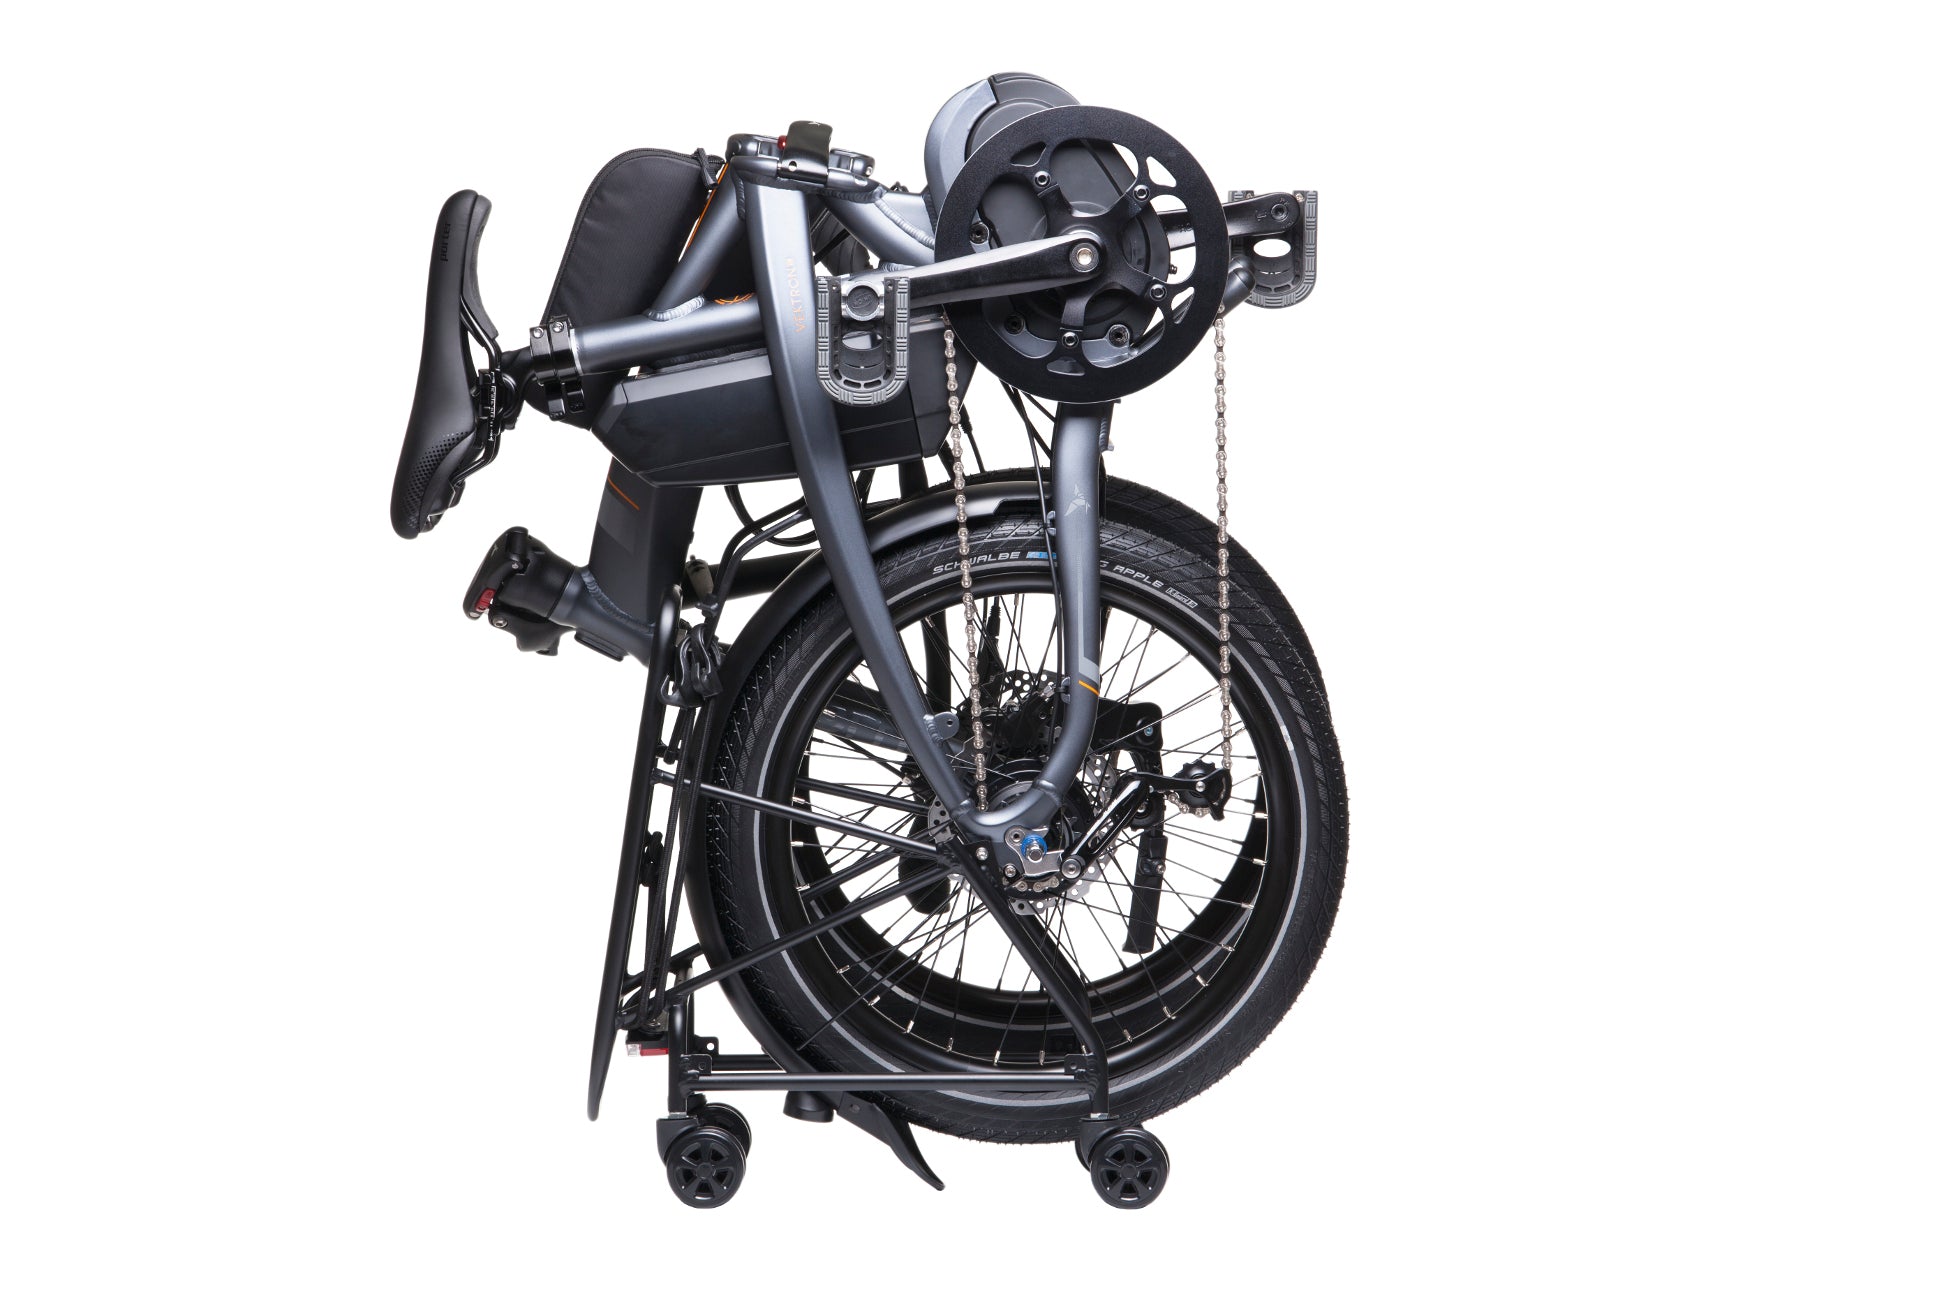 Tern Rapid Transit rack for easy navigation of folding bike